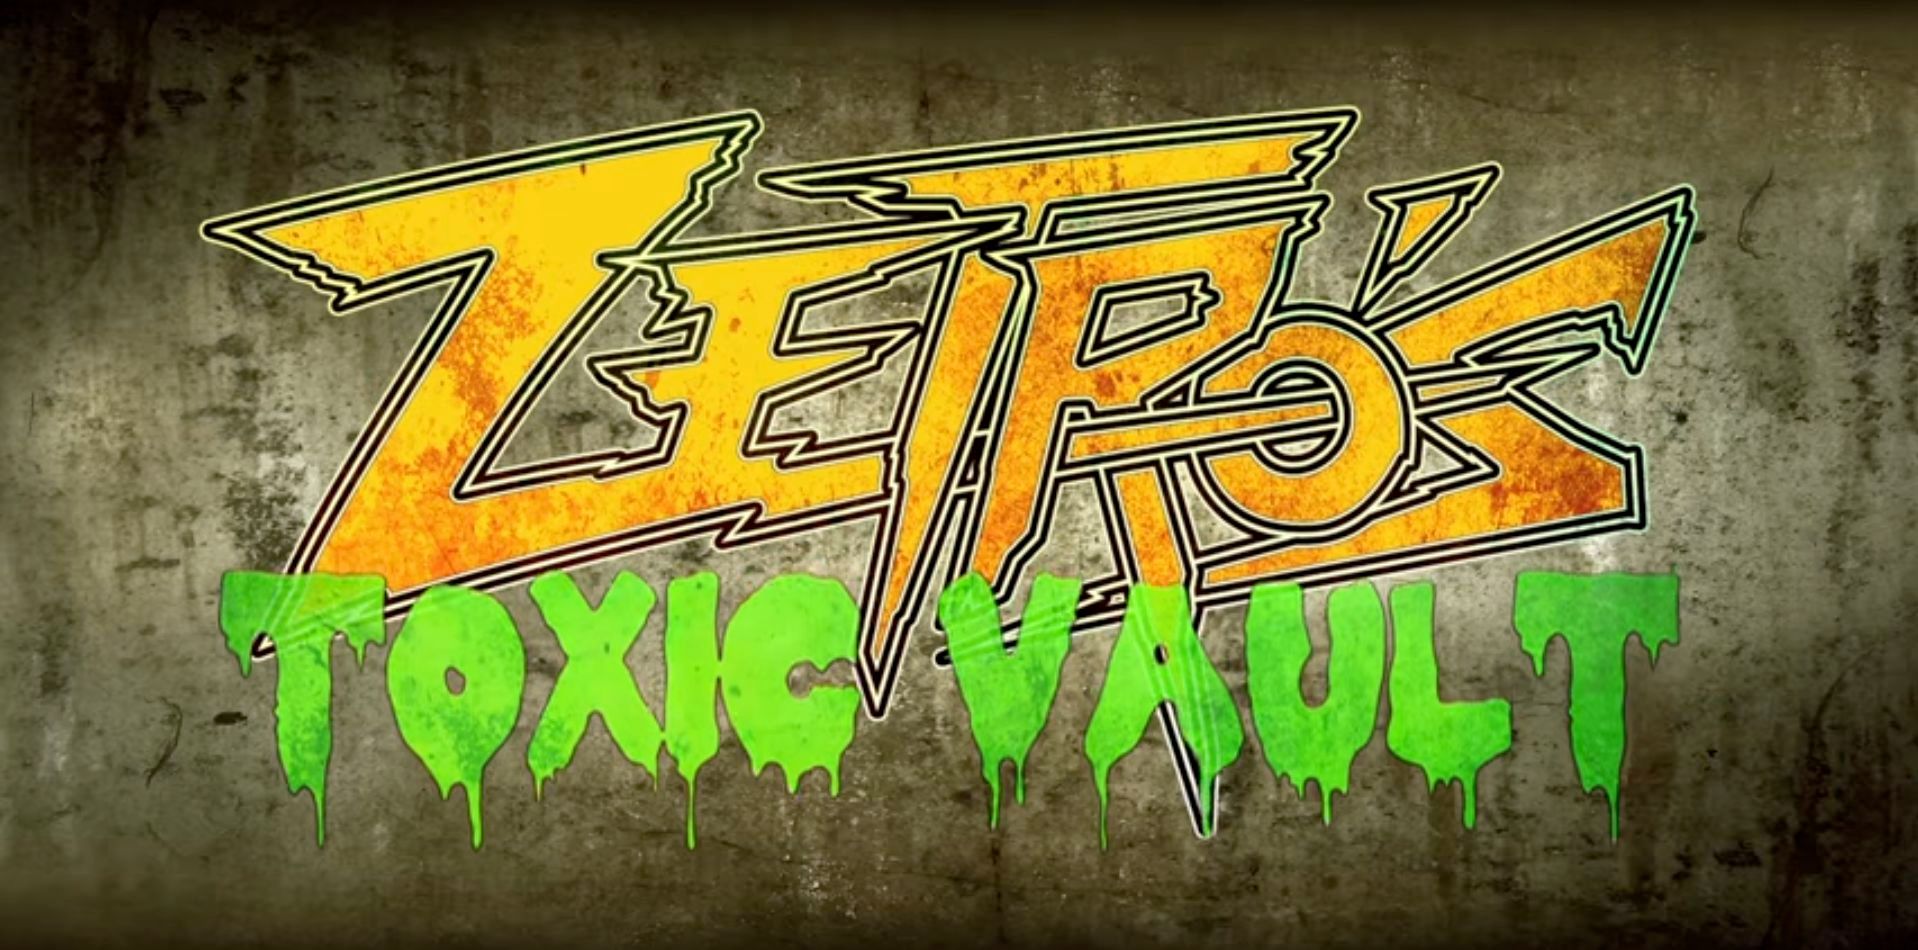 Steve "Zetro" Souza interviewt Craig Locicero in "Zetro's Toxic Vault"